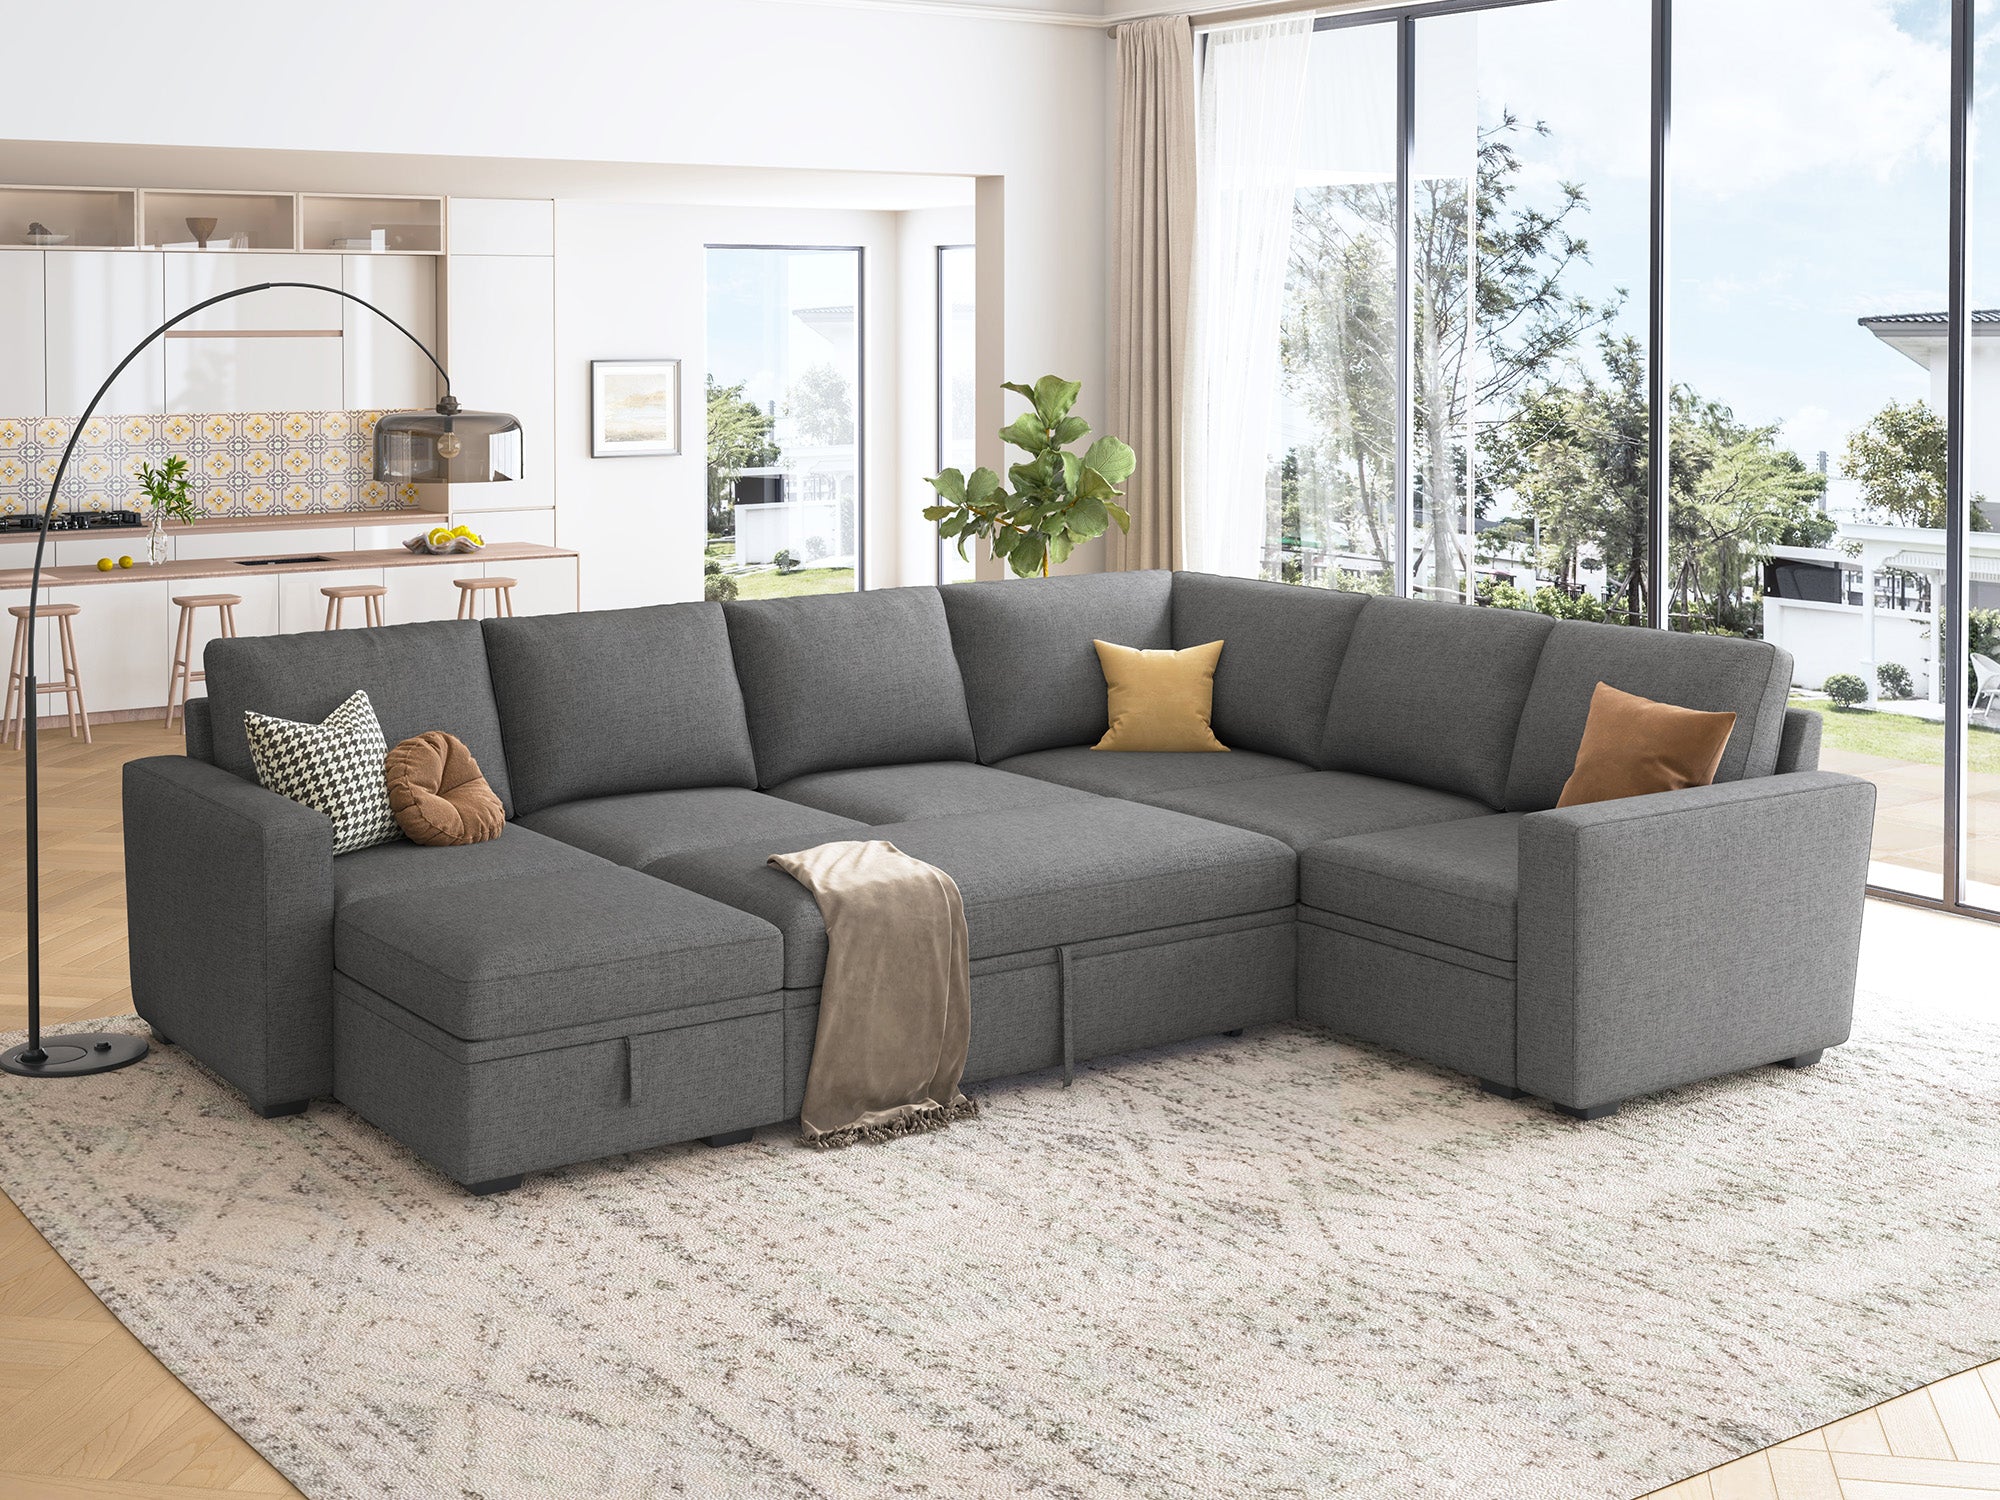 HONBAY Sleep Modular Sofa 7-Seat Sofa Bed with 4-Storage Space #Color_Dark Grey